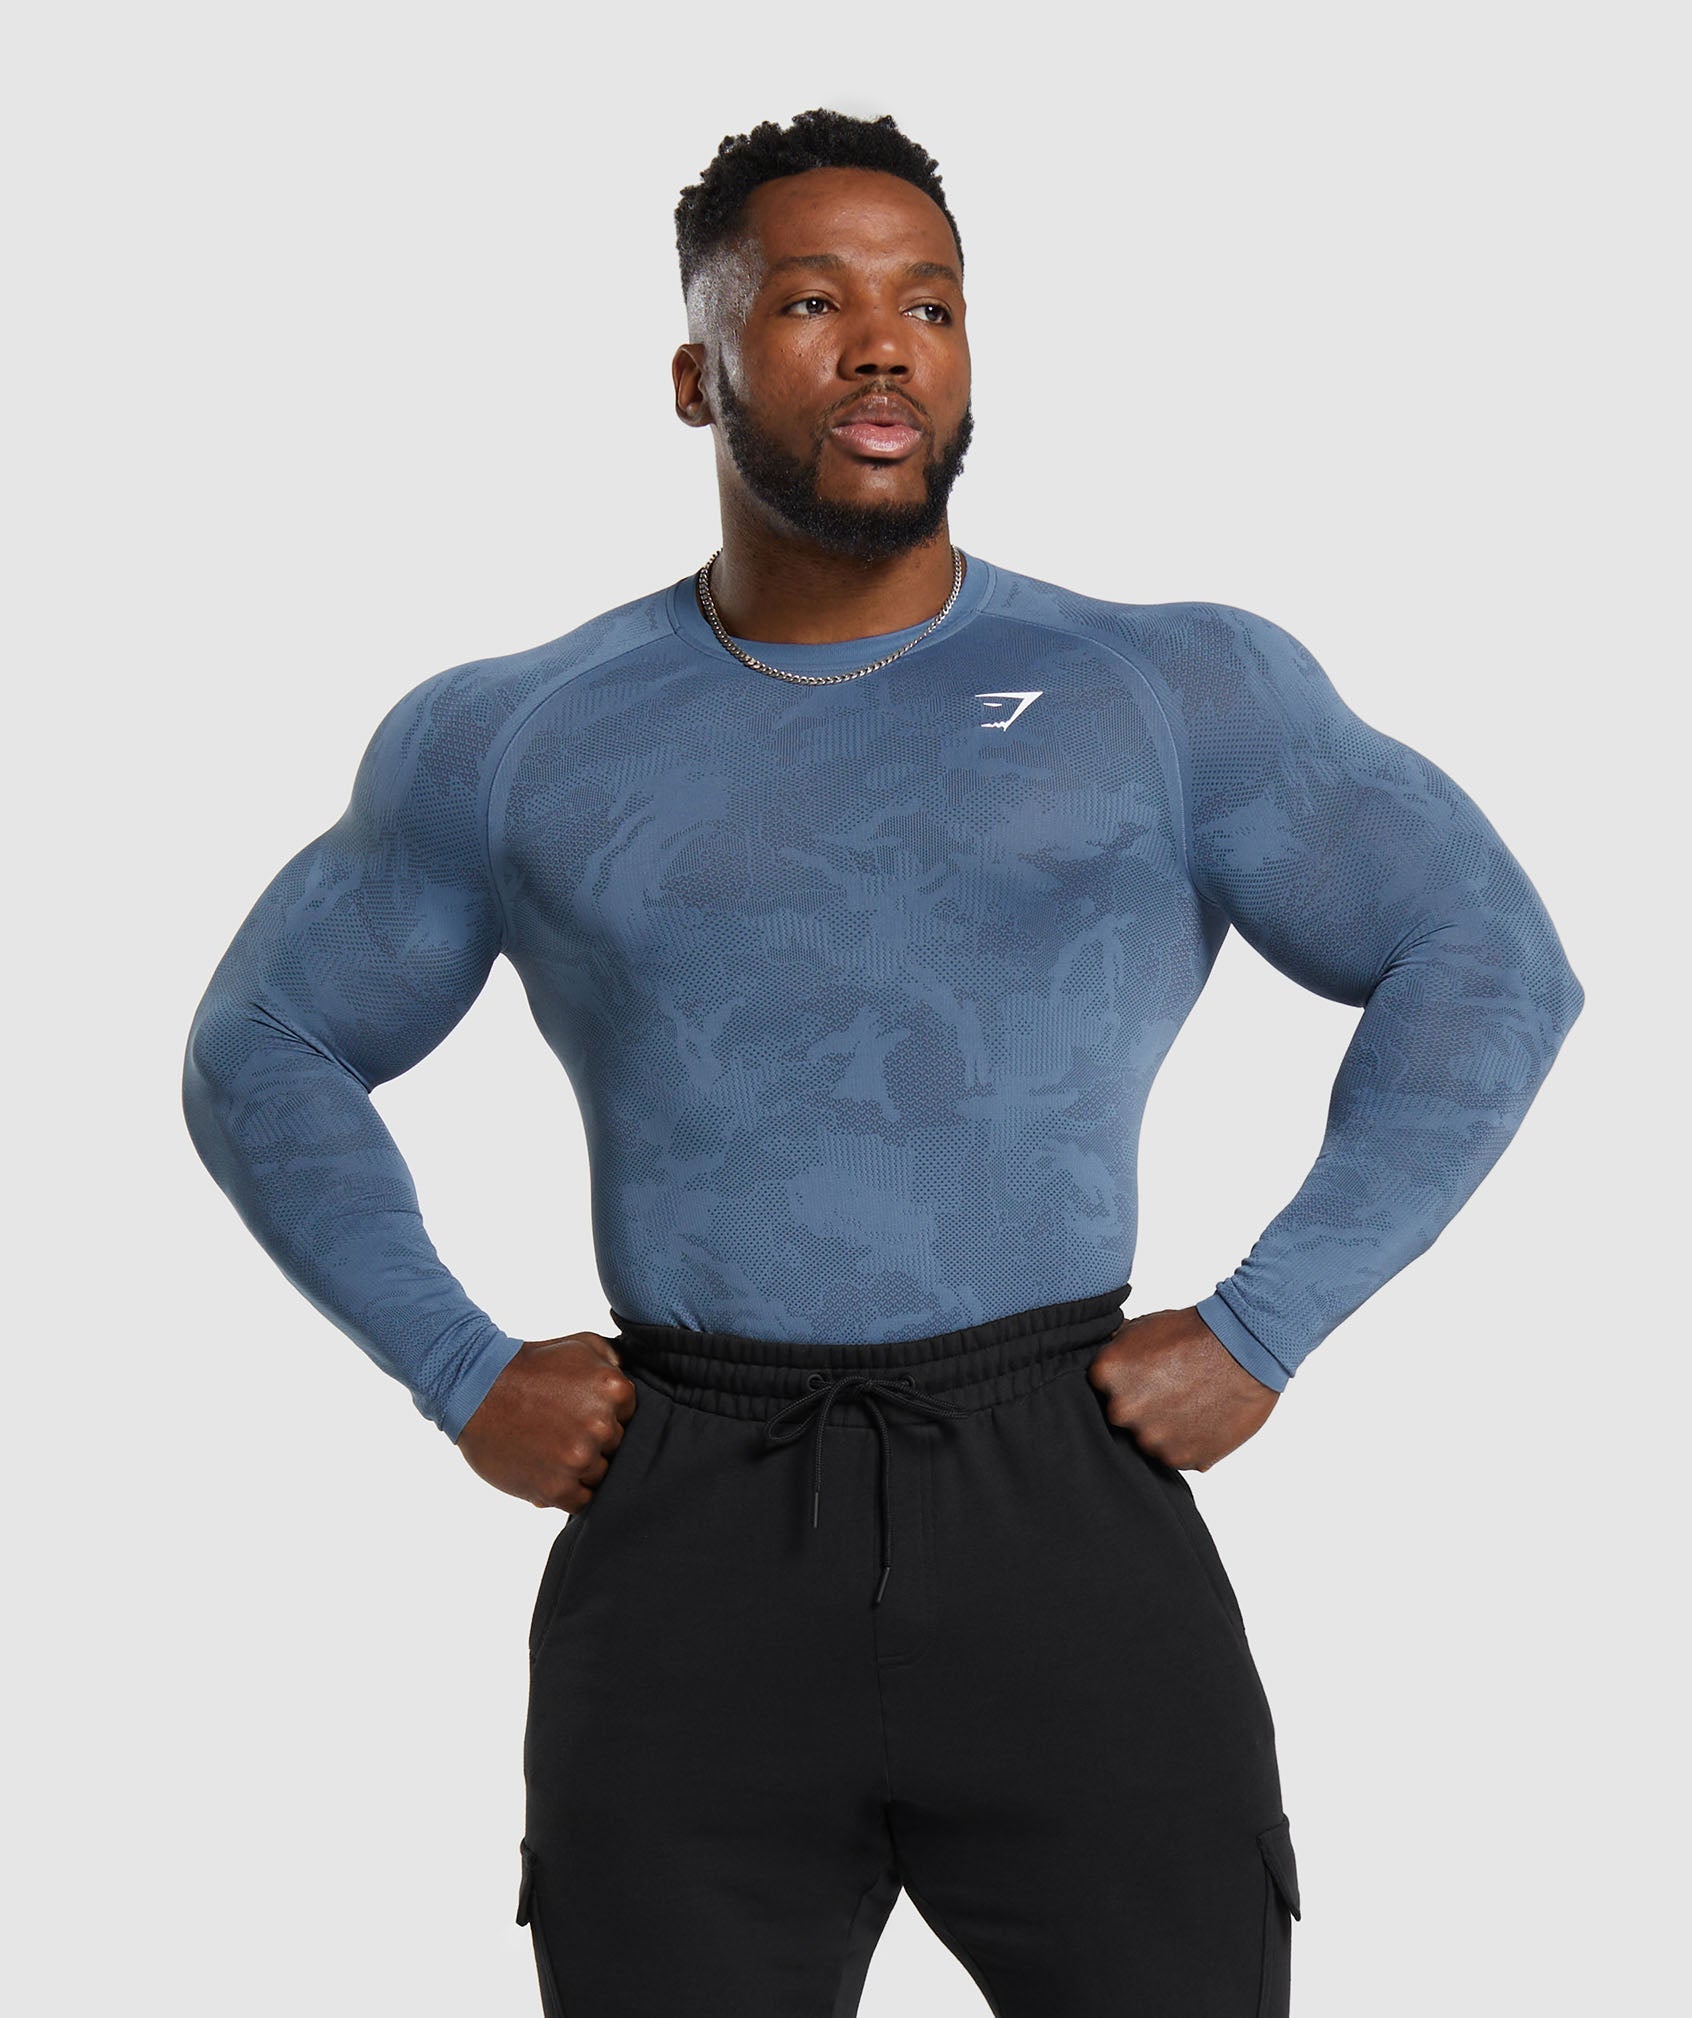 Men's Long Sleeve Workout Shirts & Tops - Gymshark